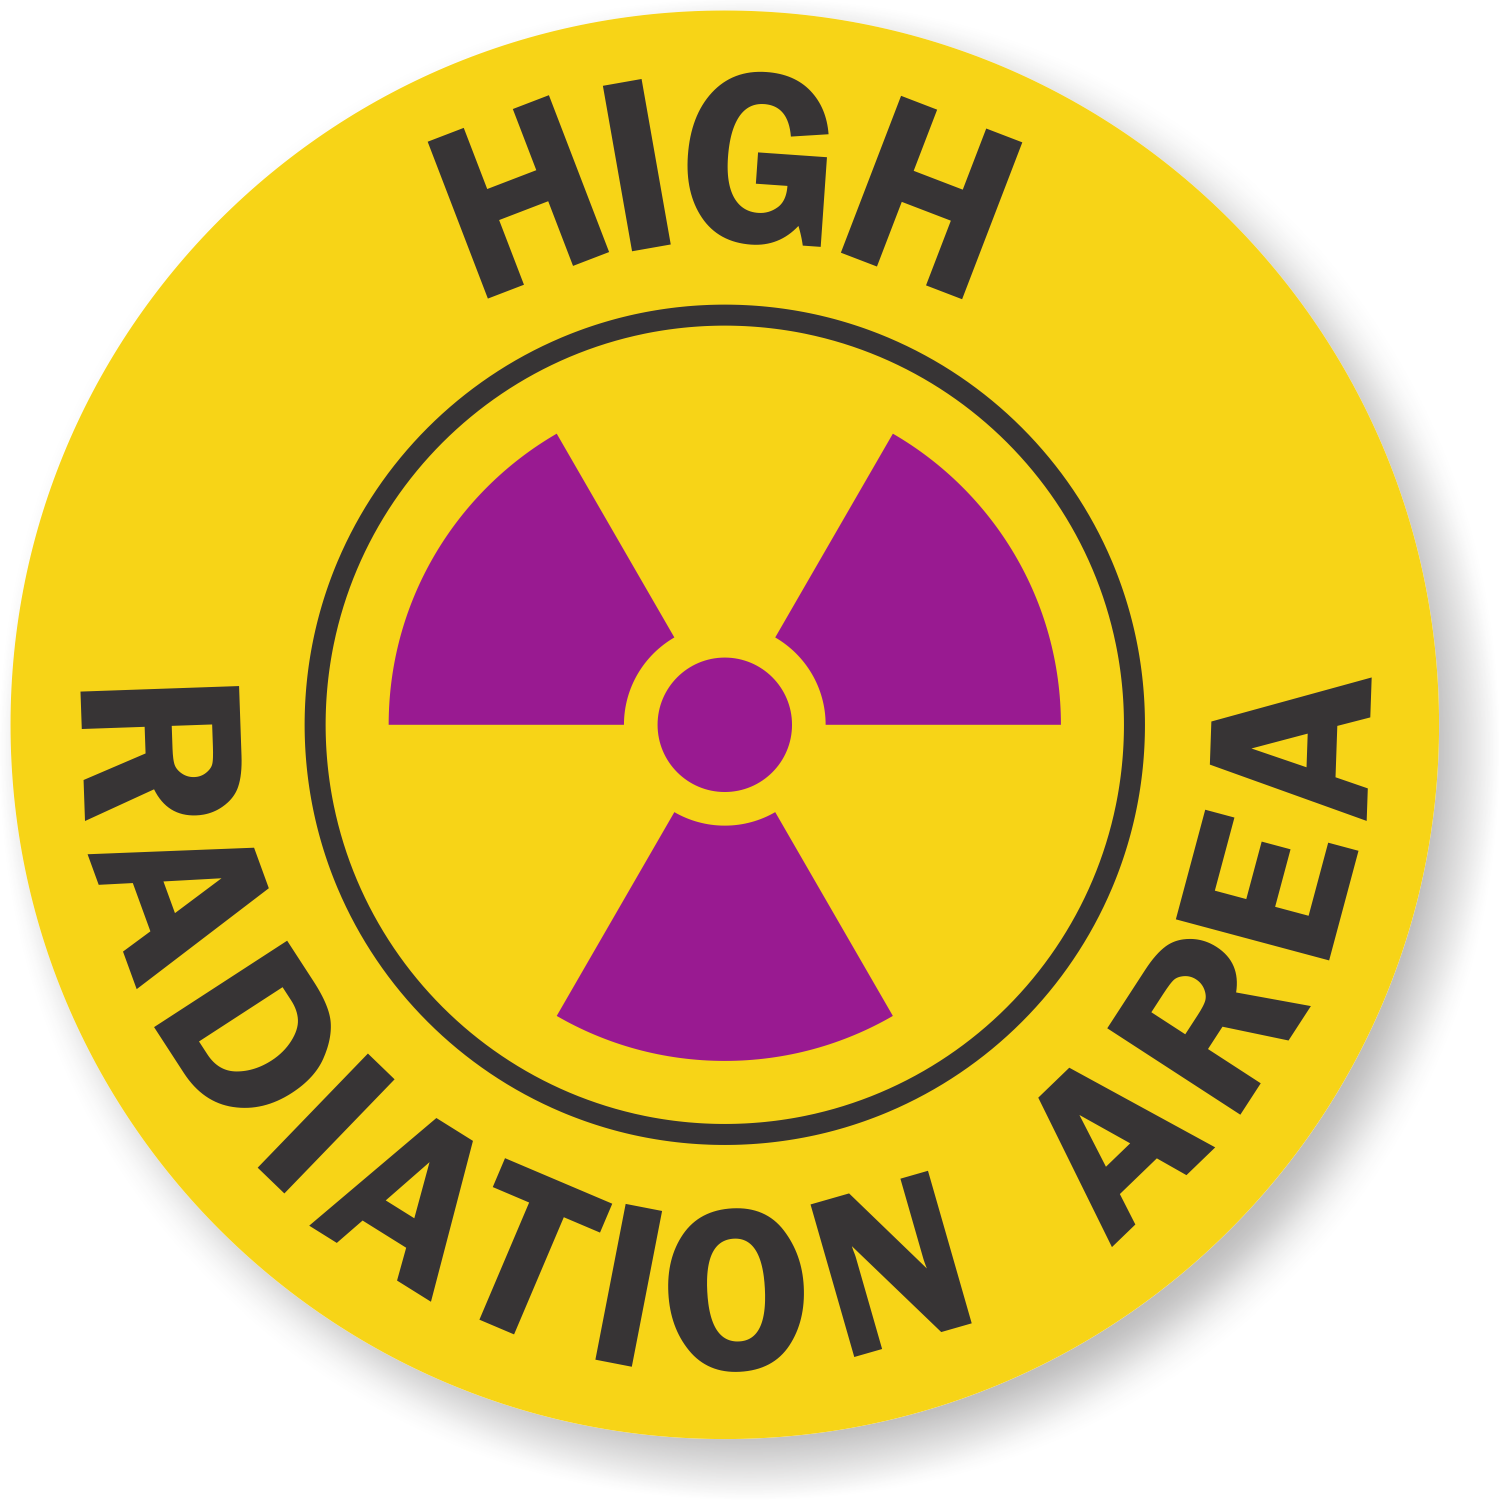 High Radiation Area Adhesive Floor Sign